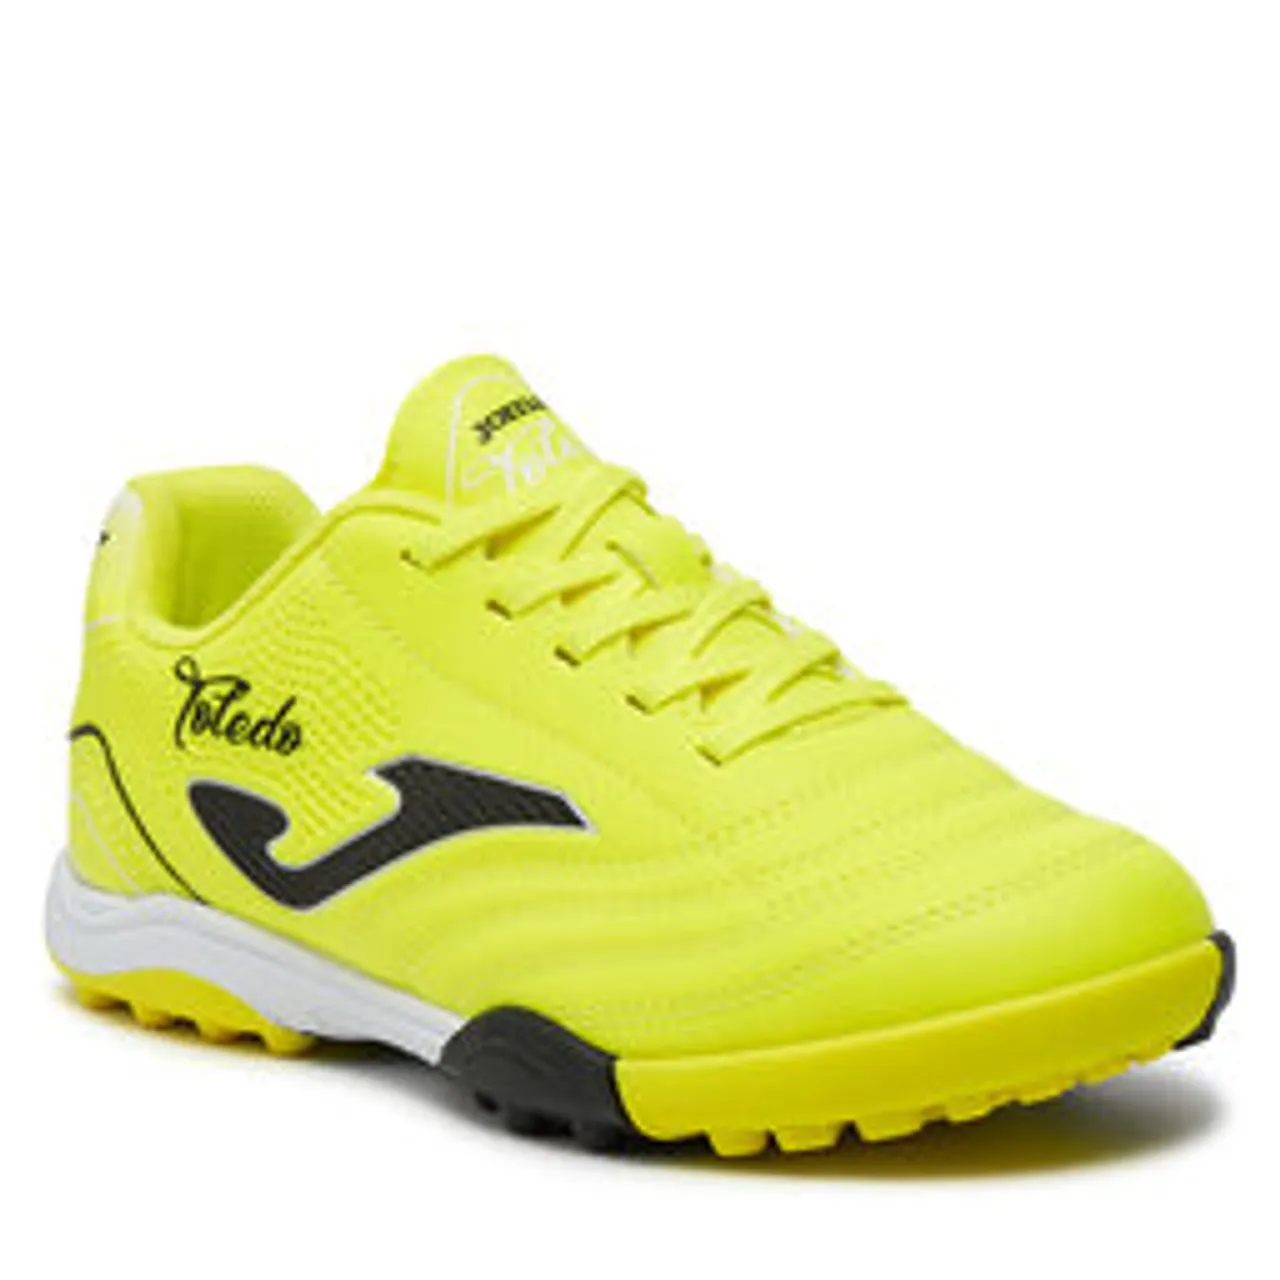 Schuhe Joma Toledo Jr 2409 TOJS2409TF Fluorescent Yellow